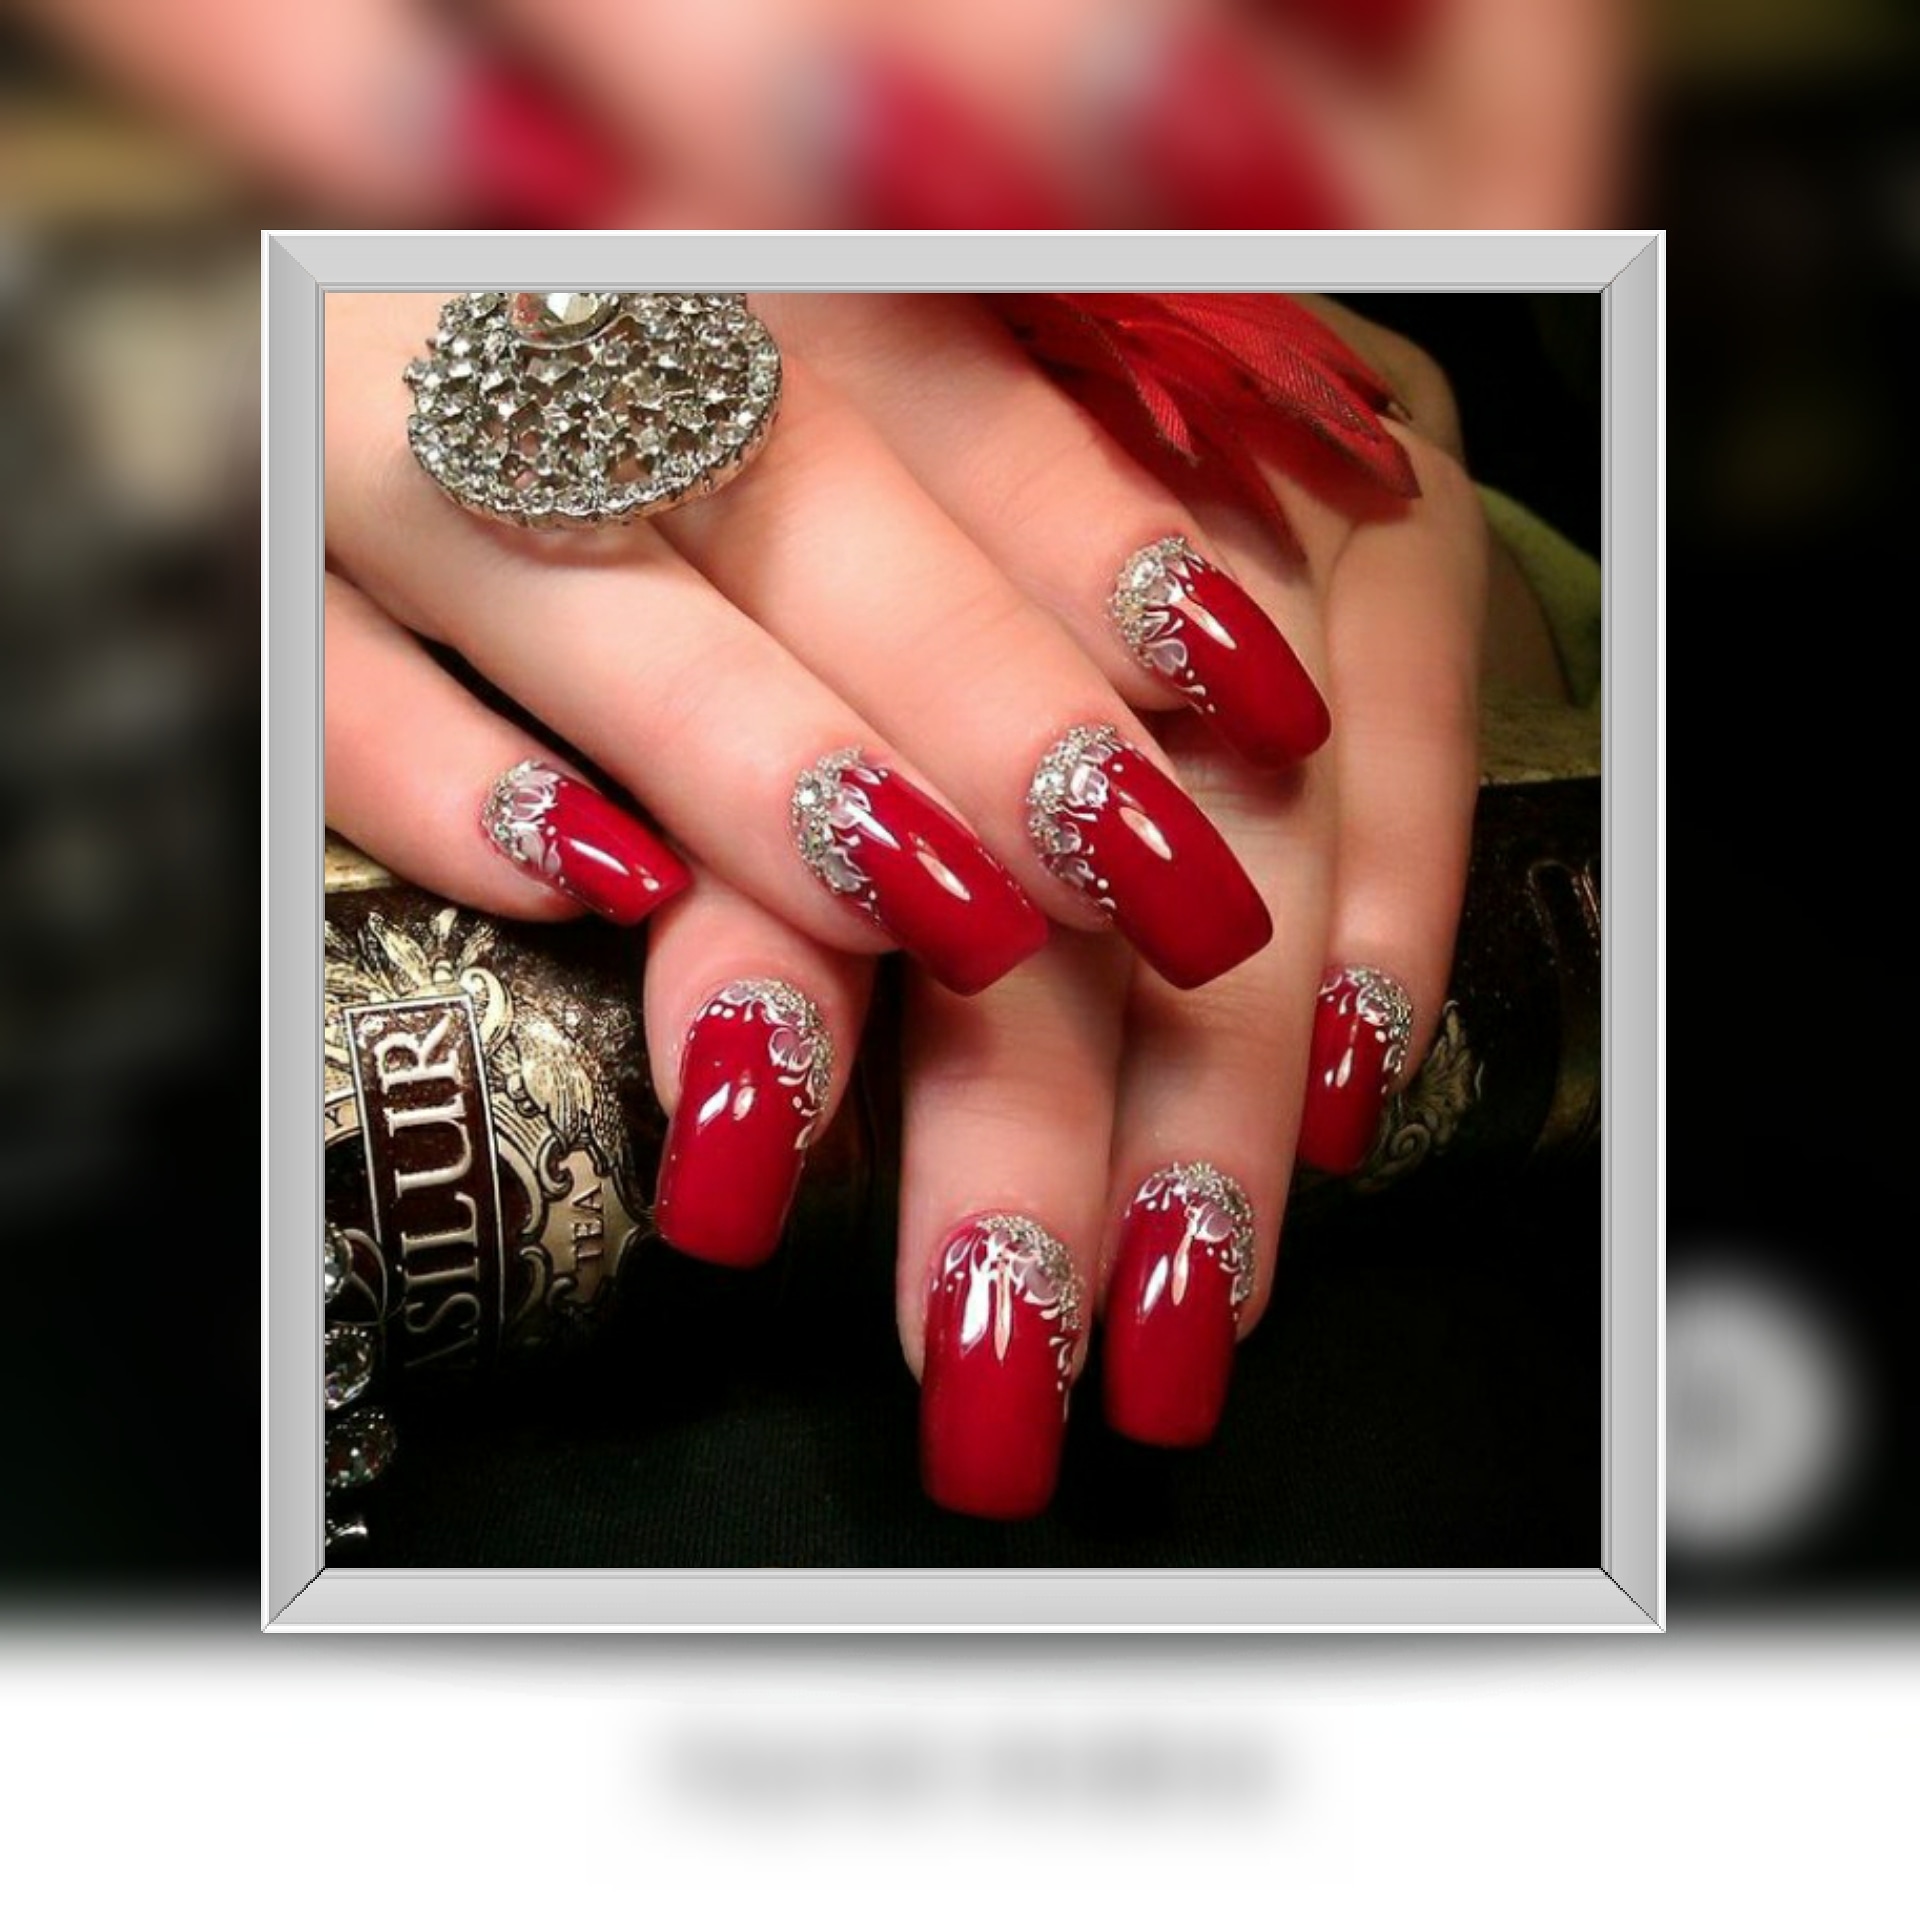 bede leder twinkle Cara Nails Malta on Twitter: "#romantic #red #nails #malta #caranailsmalta  #caranails #nailgelpolish #nailgel #beauty #makeup #cosmetics #manicure # pedicure #handcare #handmade #hands #maltagram🇲🇹 #maltagram #visitmalta  #maltanese #pretty #woman ...